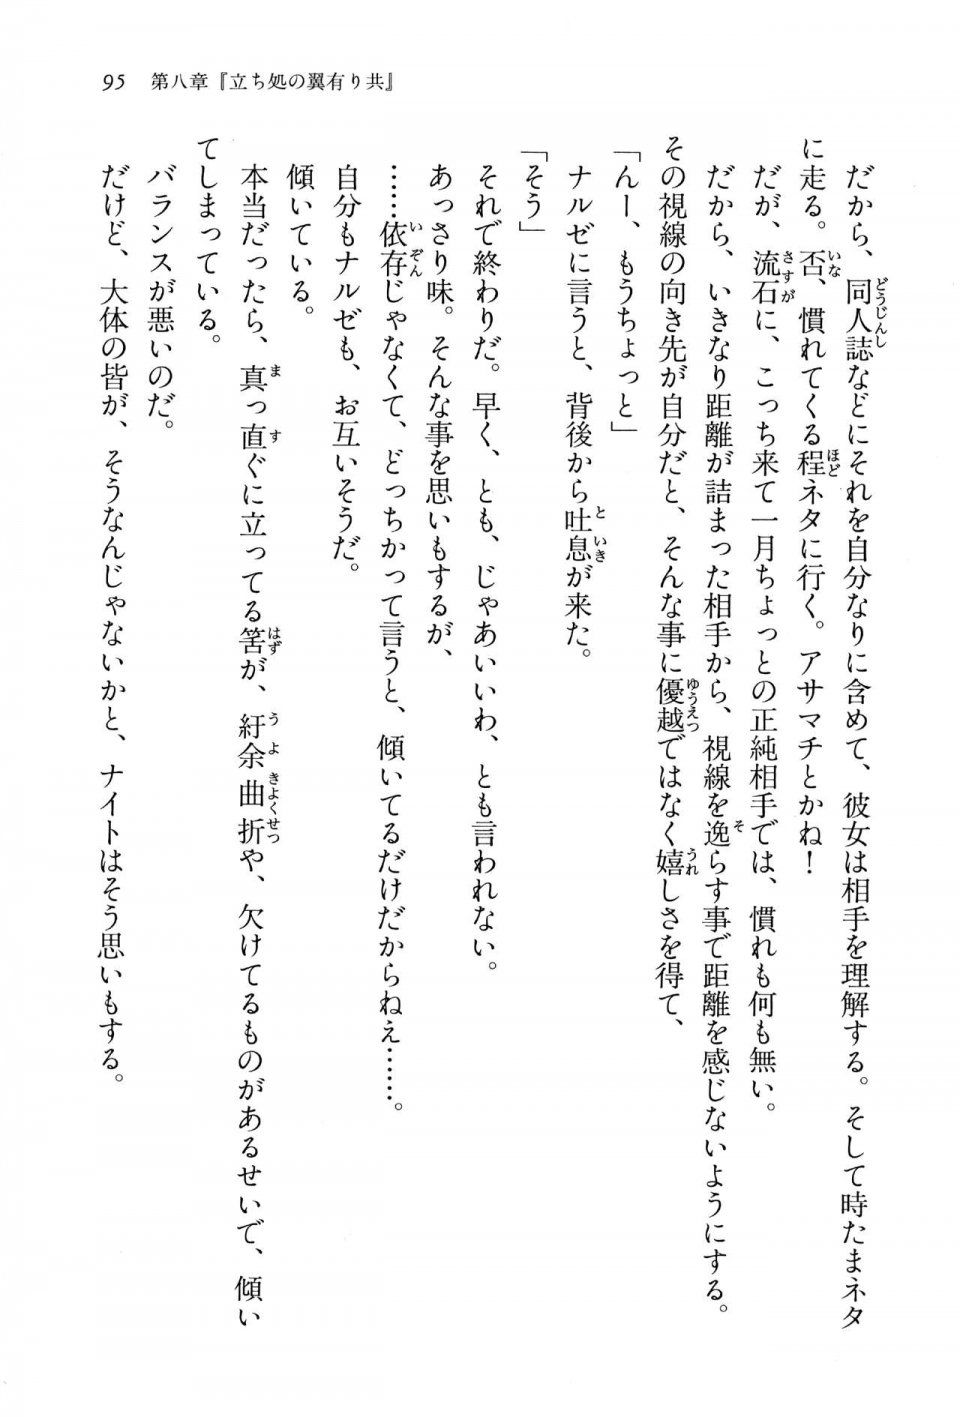 Kyoukai Senjou no Horizon BD Special Mininovel Vol 6(3B) - Photo #99